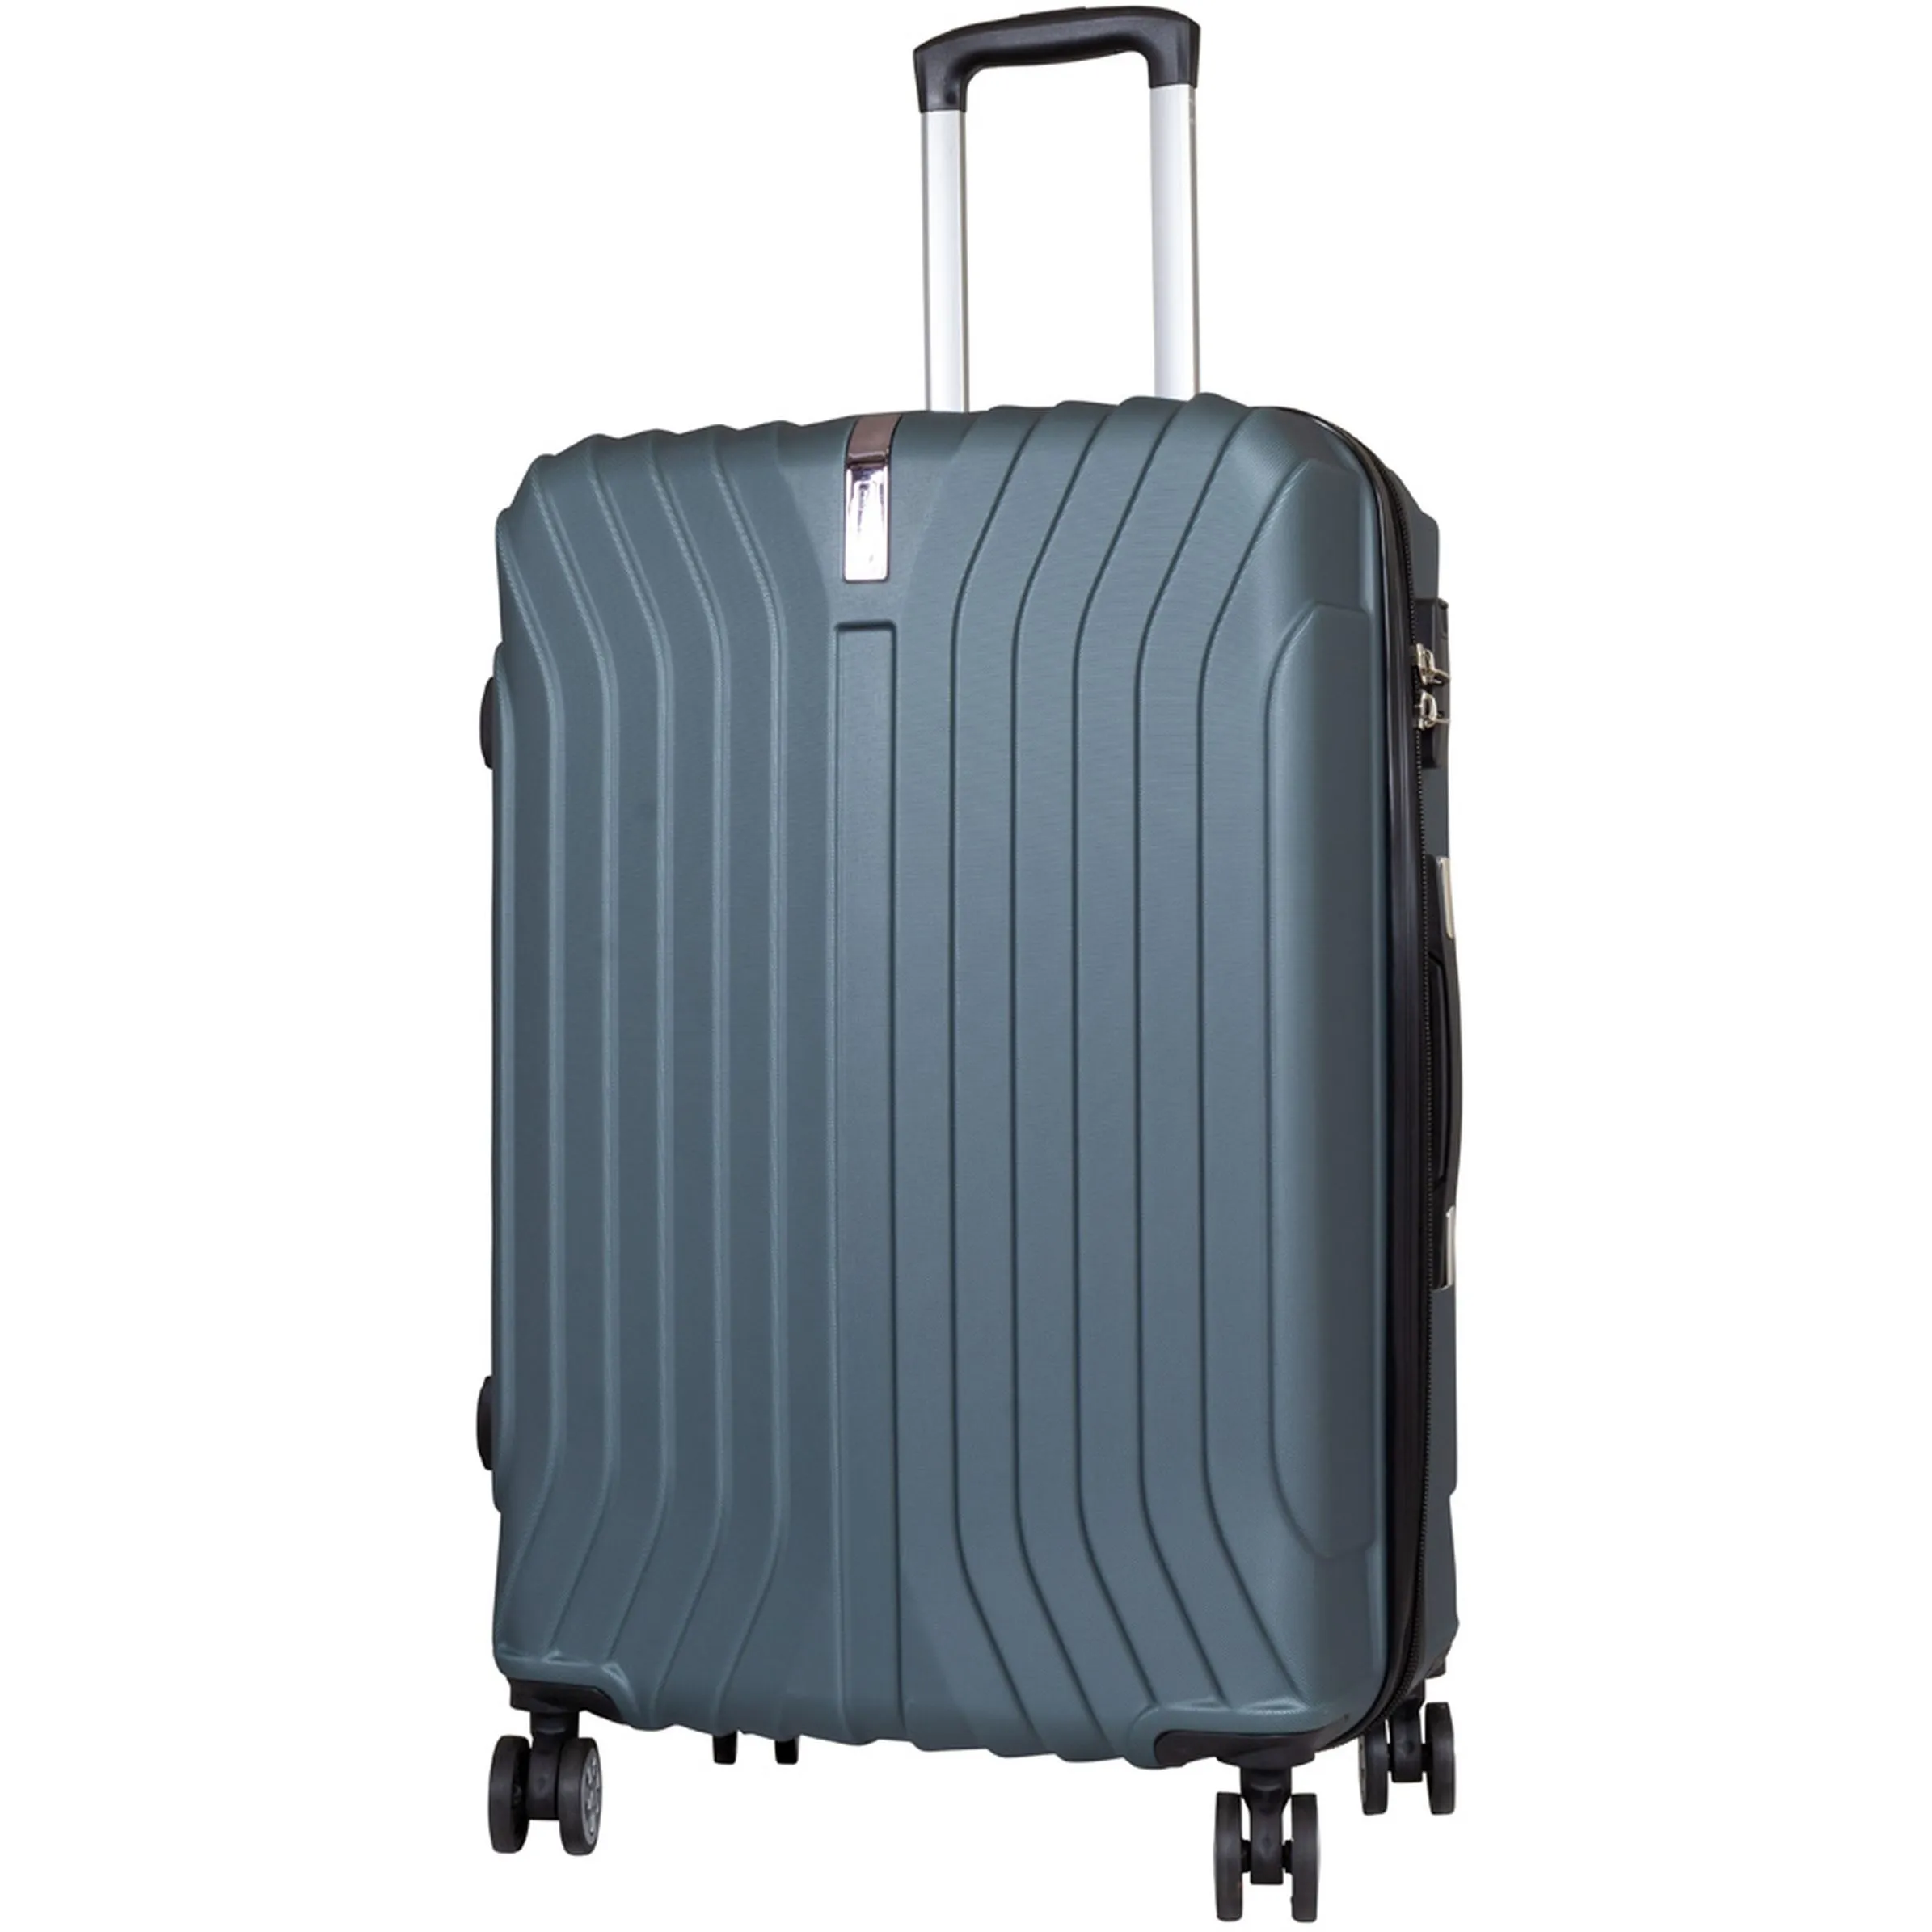 Koffer/Taschen Koffer Almeria 82L 73x48x29 Grau 894499 GRAU 1